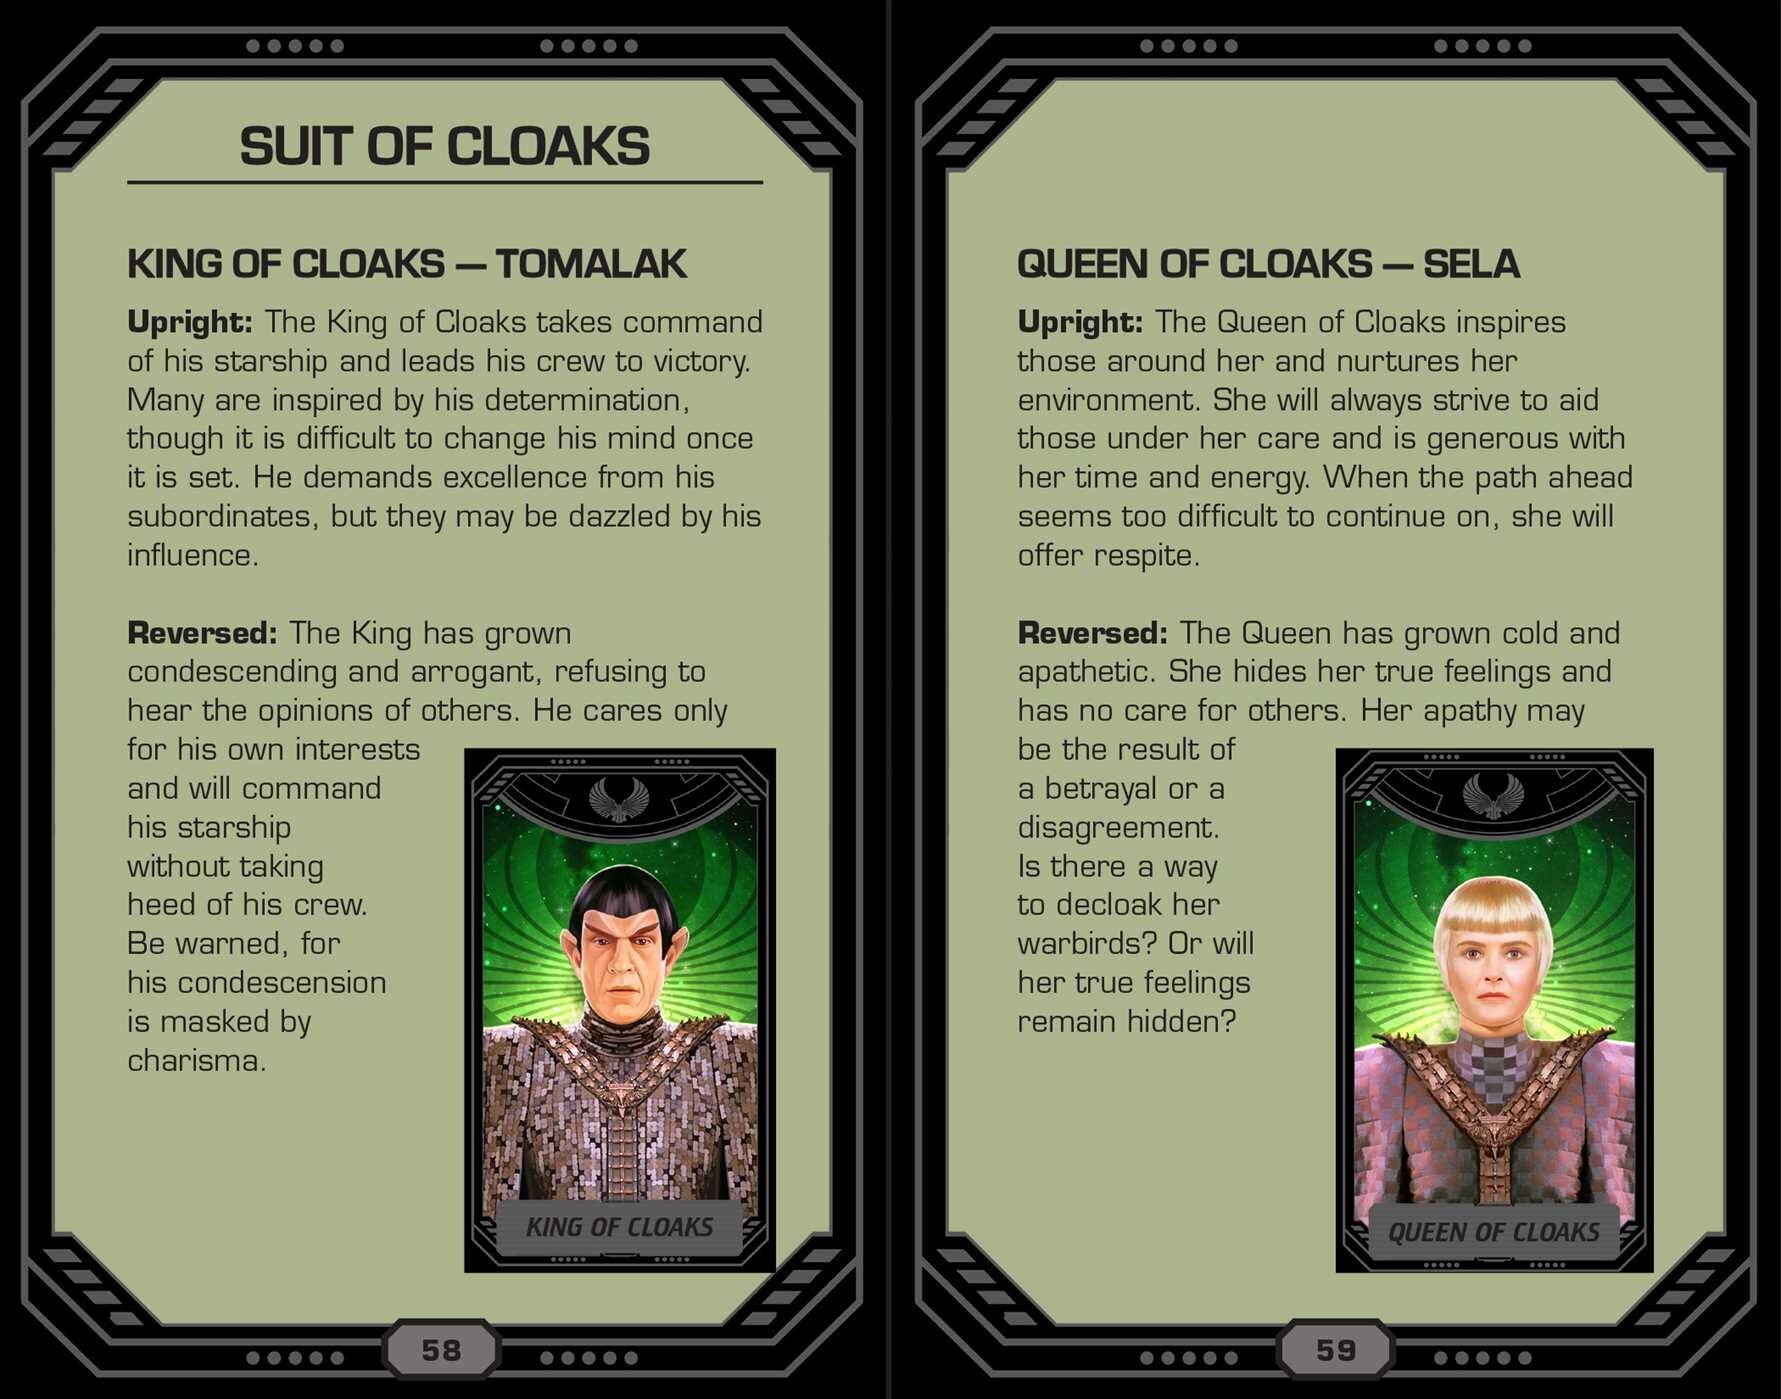 King of Cloaks & Queen of cloaks descriptions